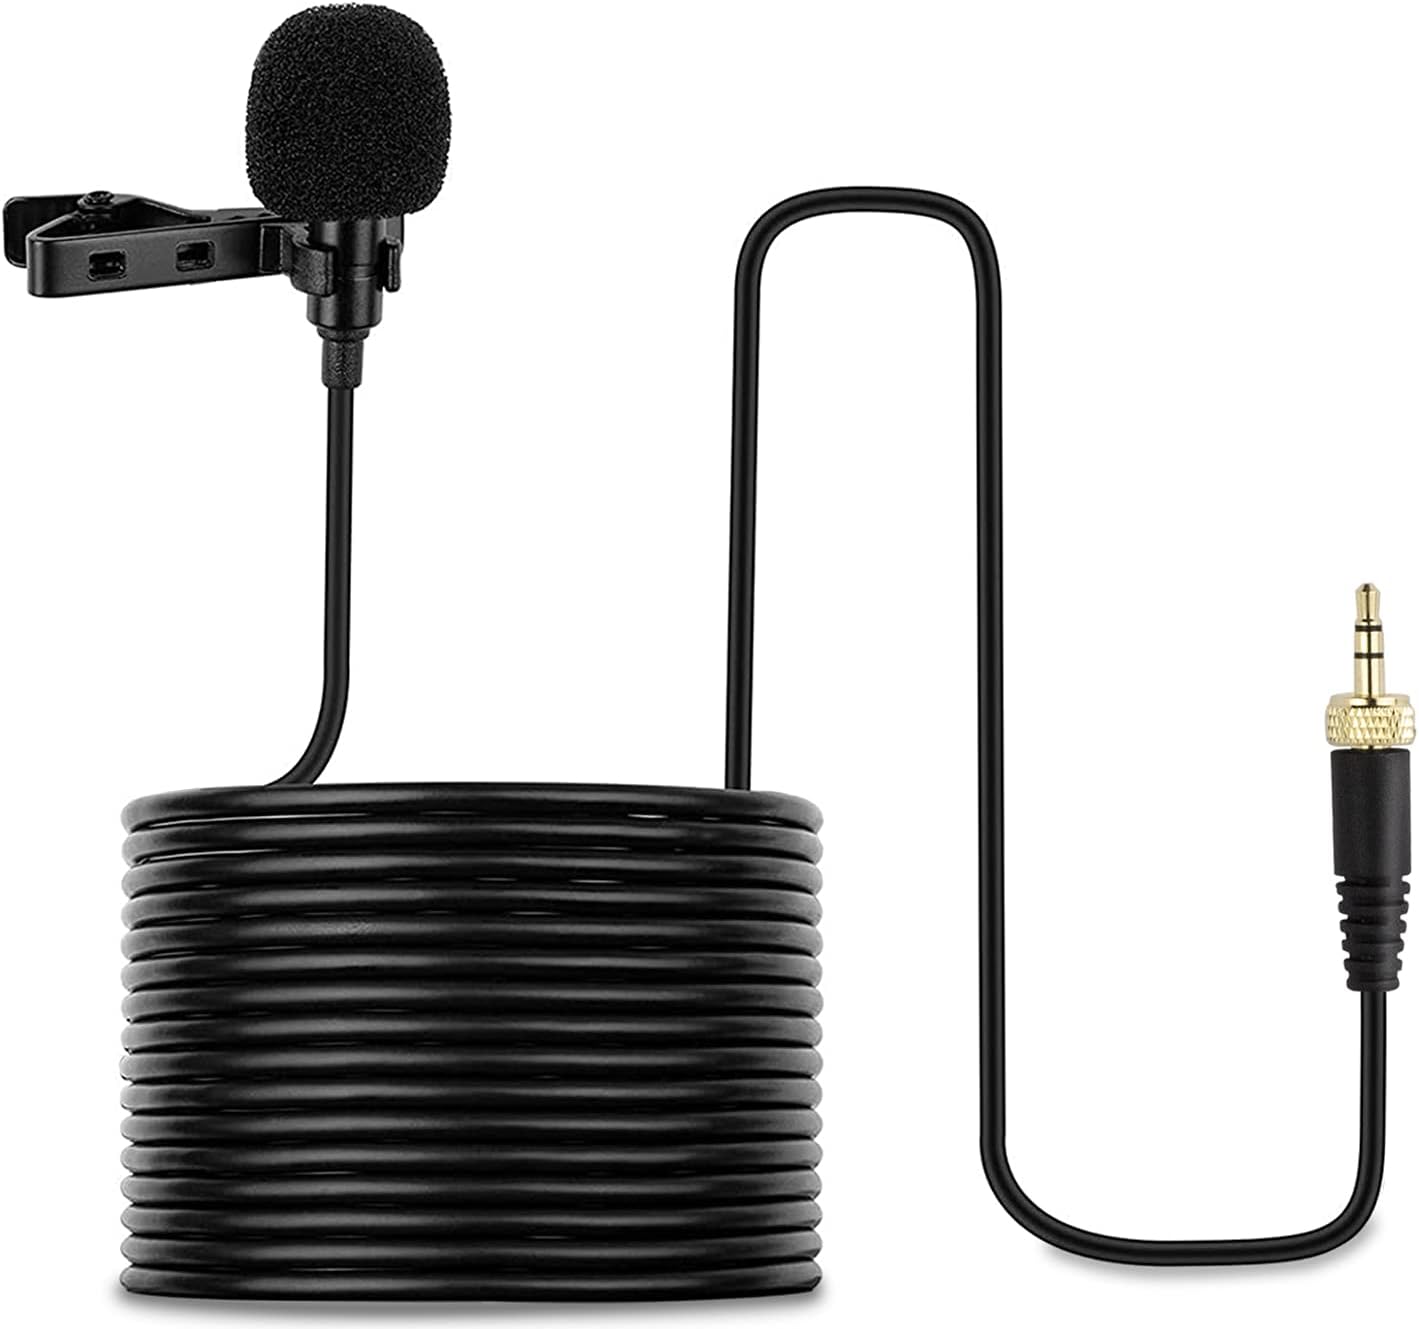 Micrófono Lavalier compatible con transmisor inalámbrico Sennheiser,  micrófono de solapa de condensador omnidireccional de 0.138 in con bloqueo  de